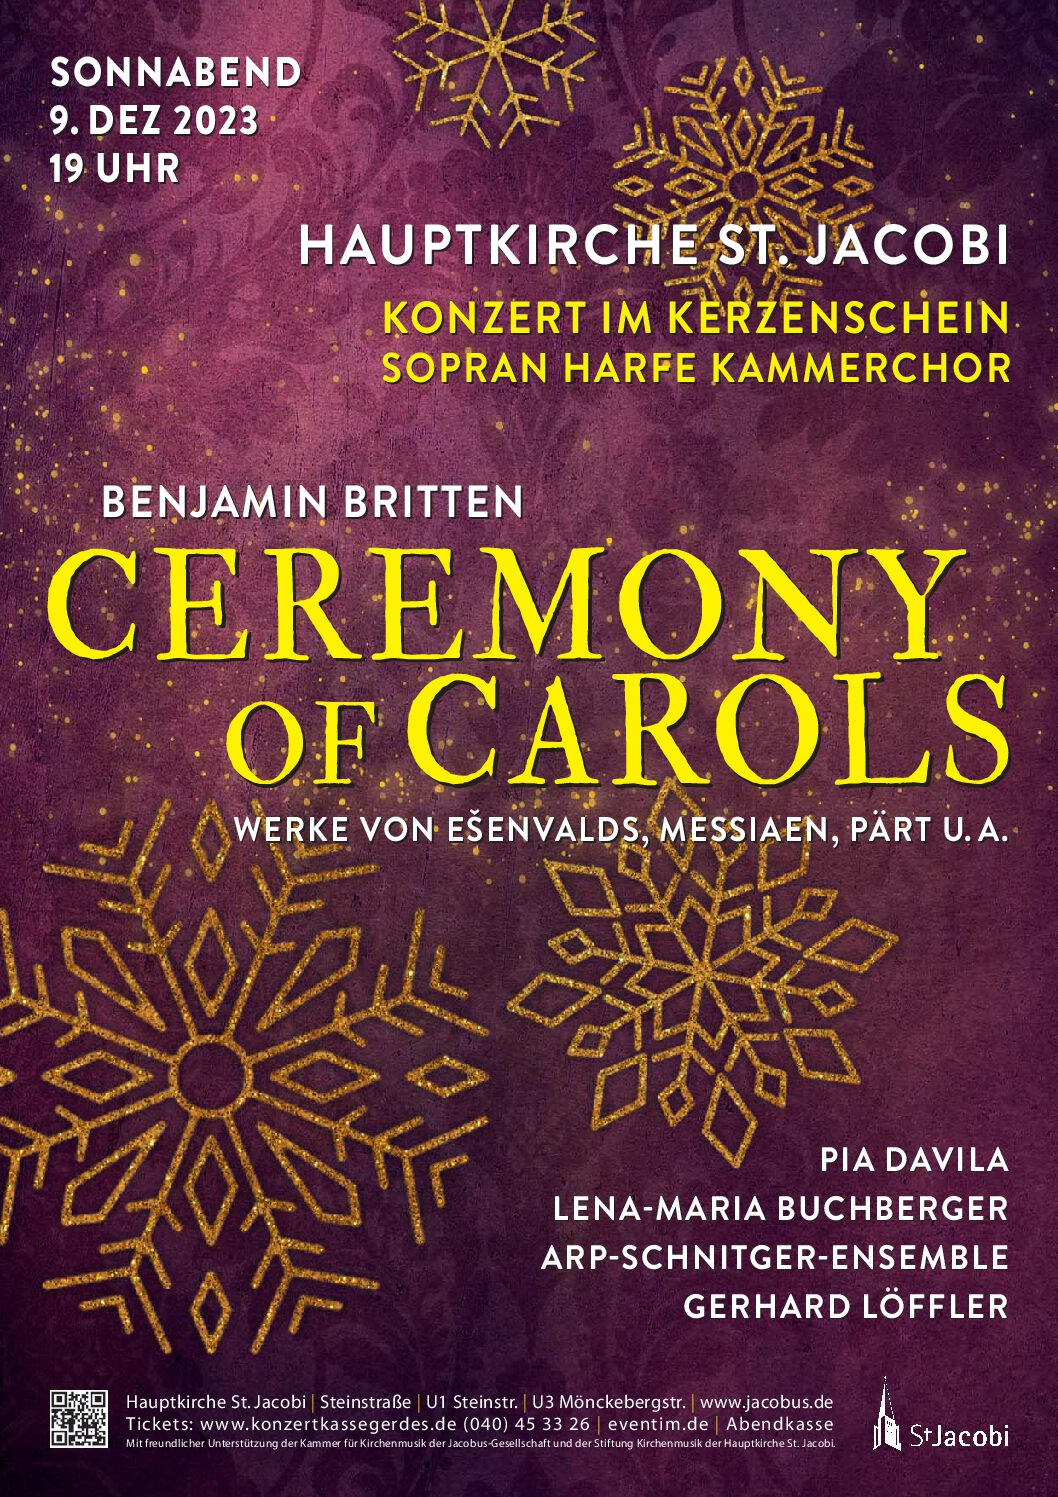 B. Britten: Ceremony of Carols